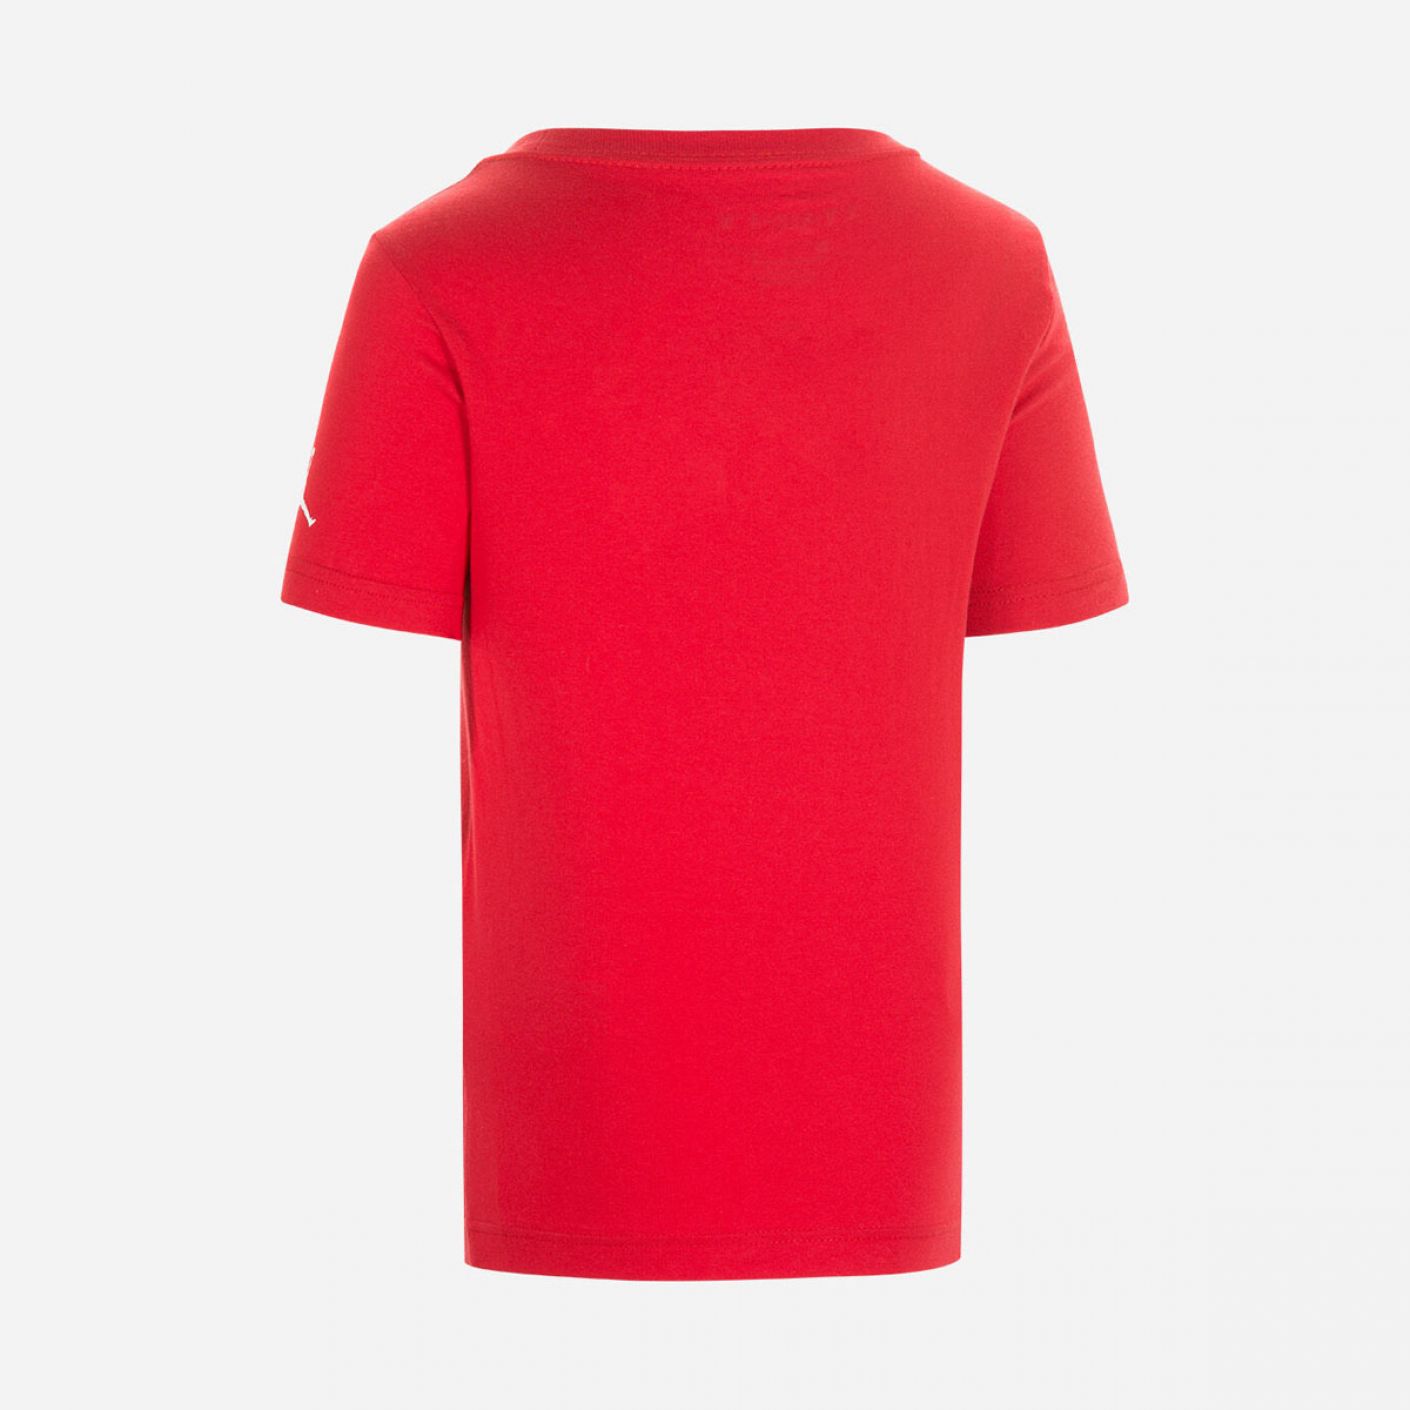 Nike Red Jordan T-shirt for Kids